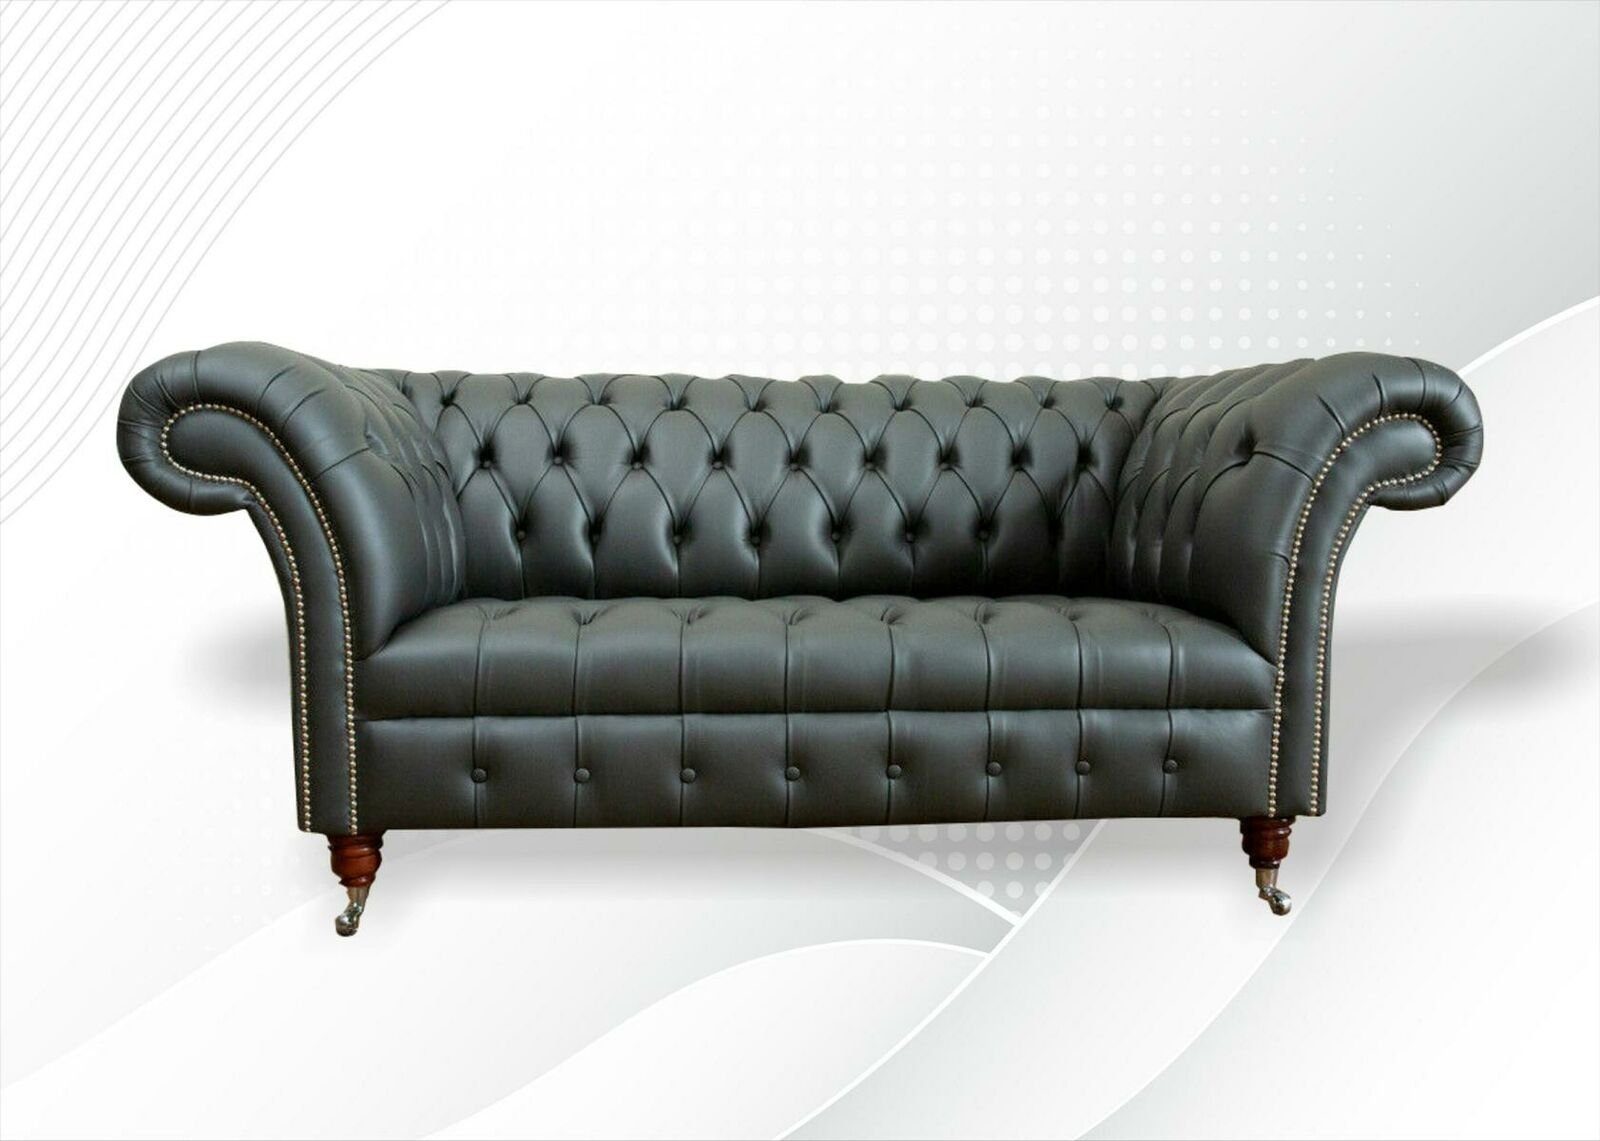 JVmoebel Sofa Chesterfield Design Sofa 2 Sitzer Sofas Polster Couchen Leder Relax, Made in Europe